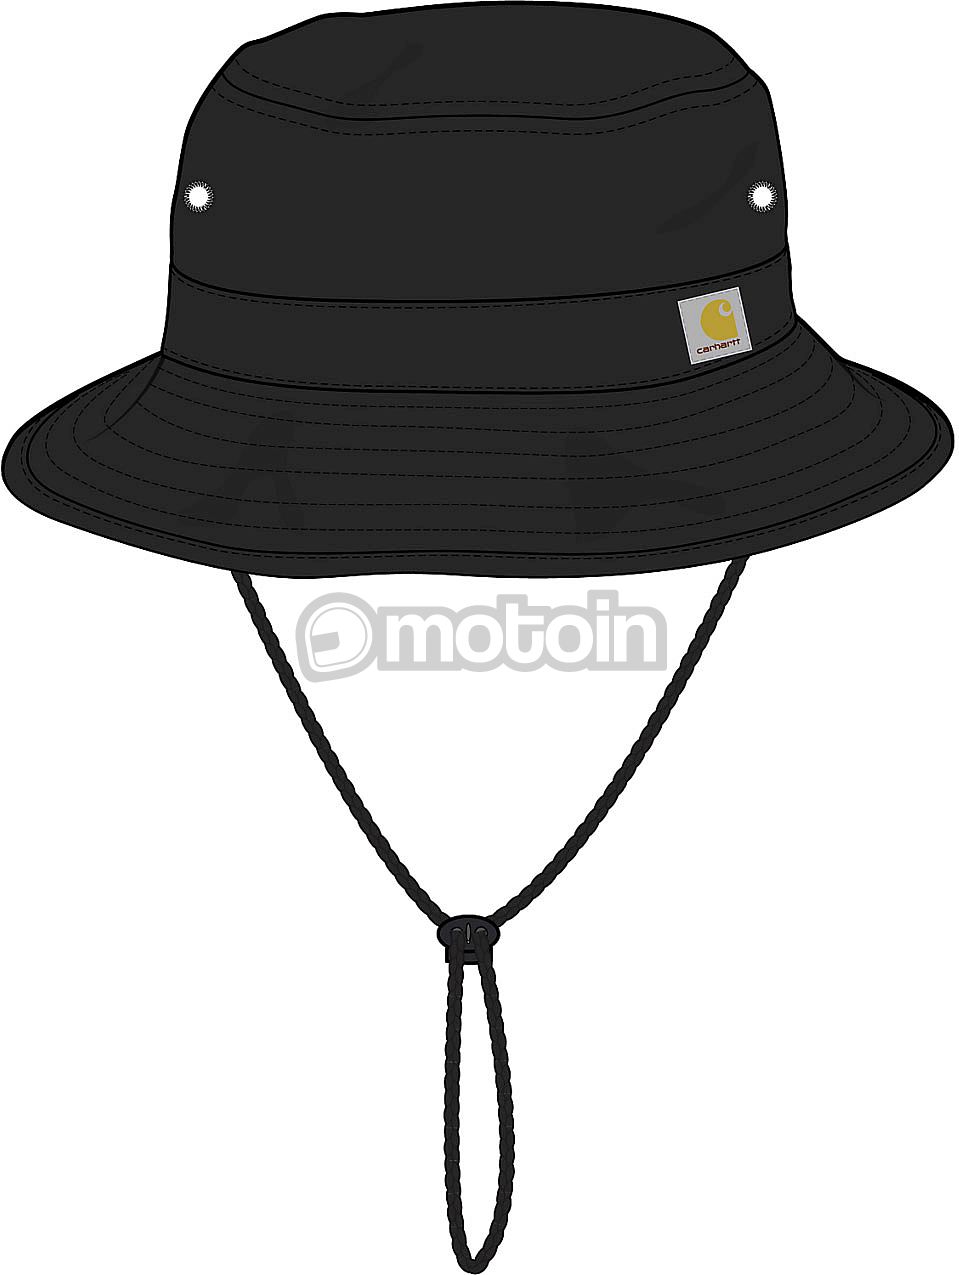 Carhartt Rain Defender Bucket, chapéu